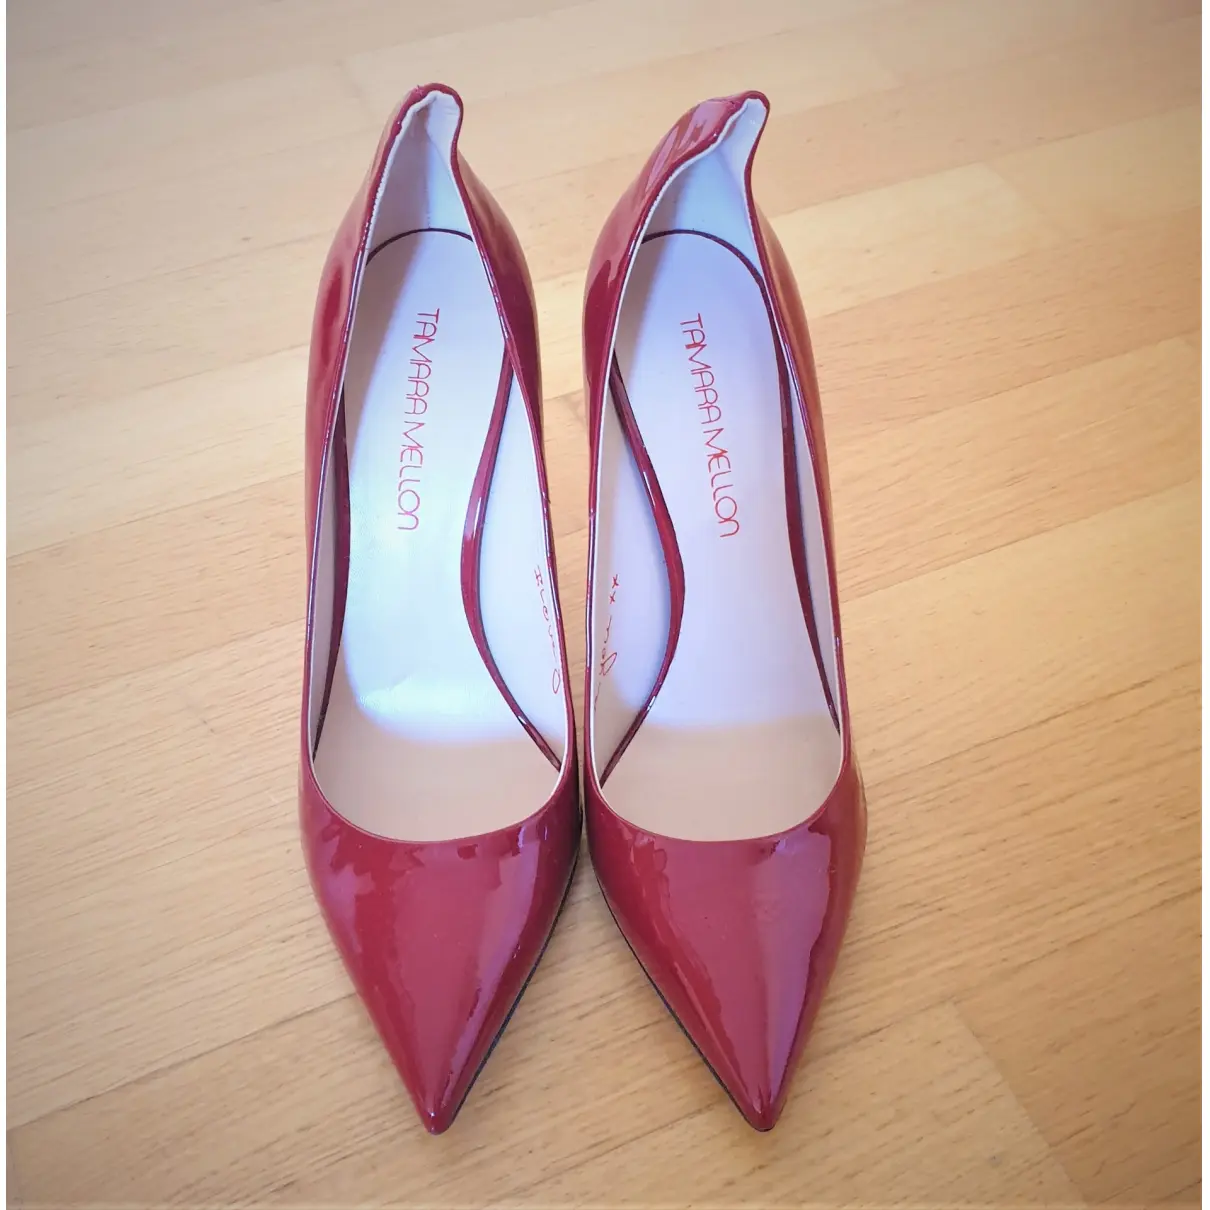 Buy Tamara Mellon Patent leather heels online